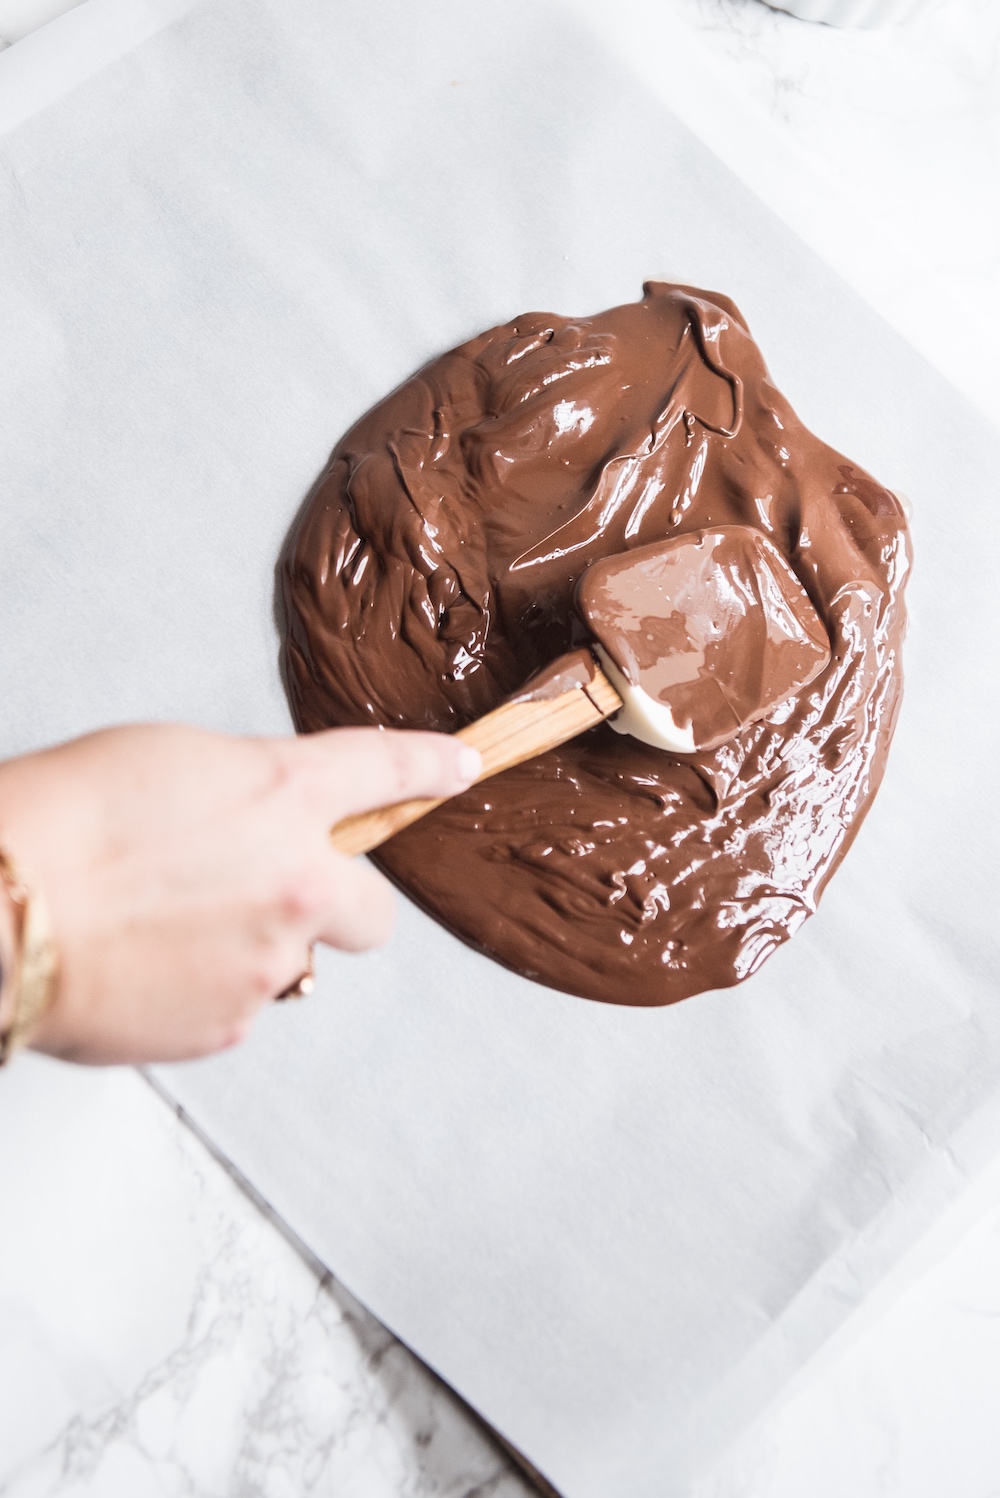 How to Make Chocolate Bark